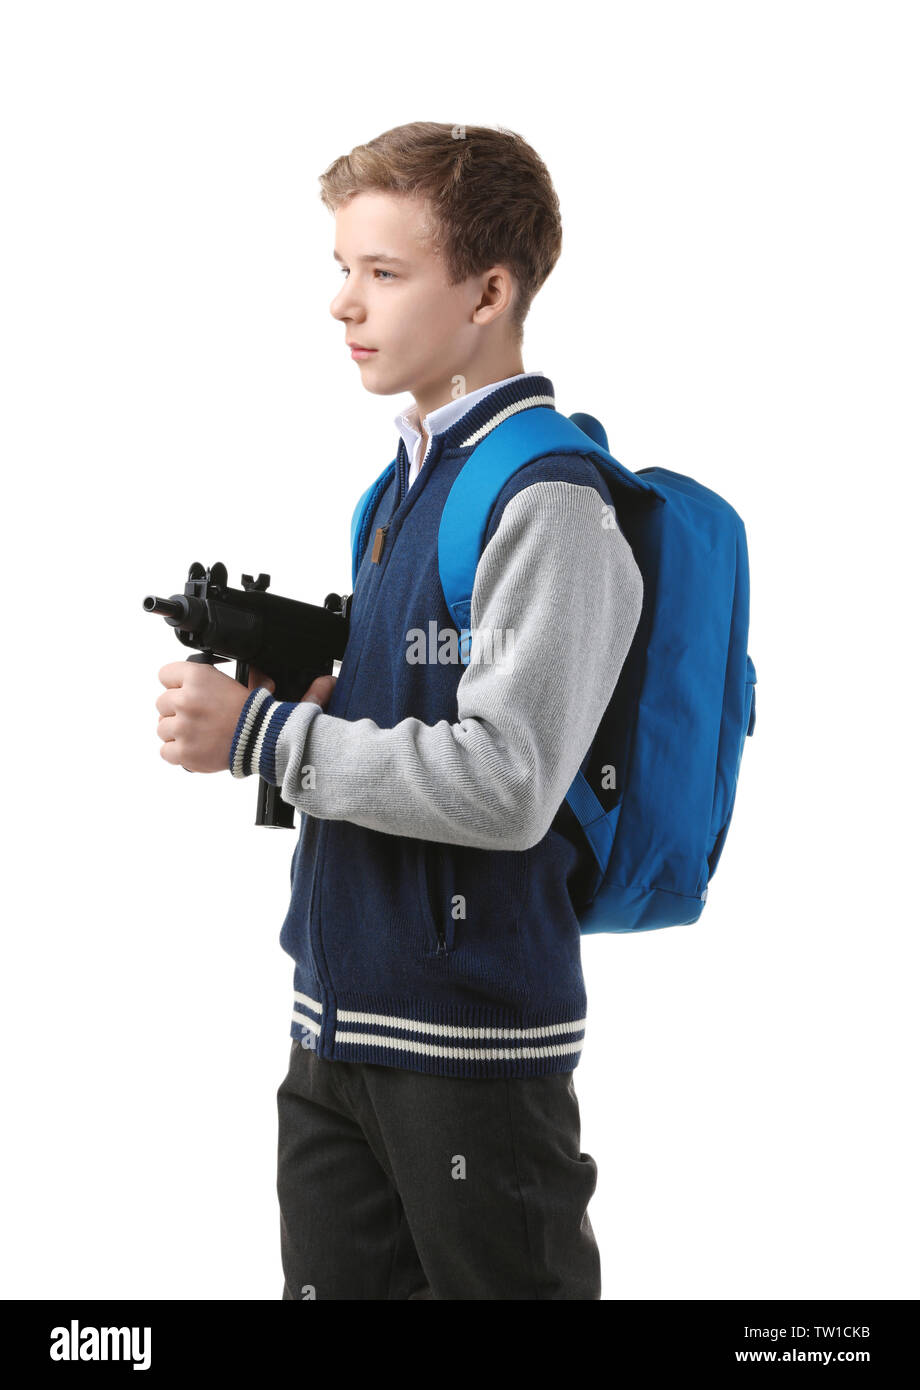 Teenage boy with backpack holding gun on white background Stock Photo -  Alamy